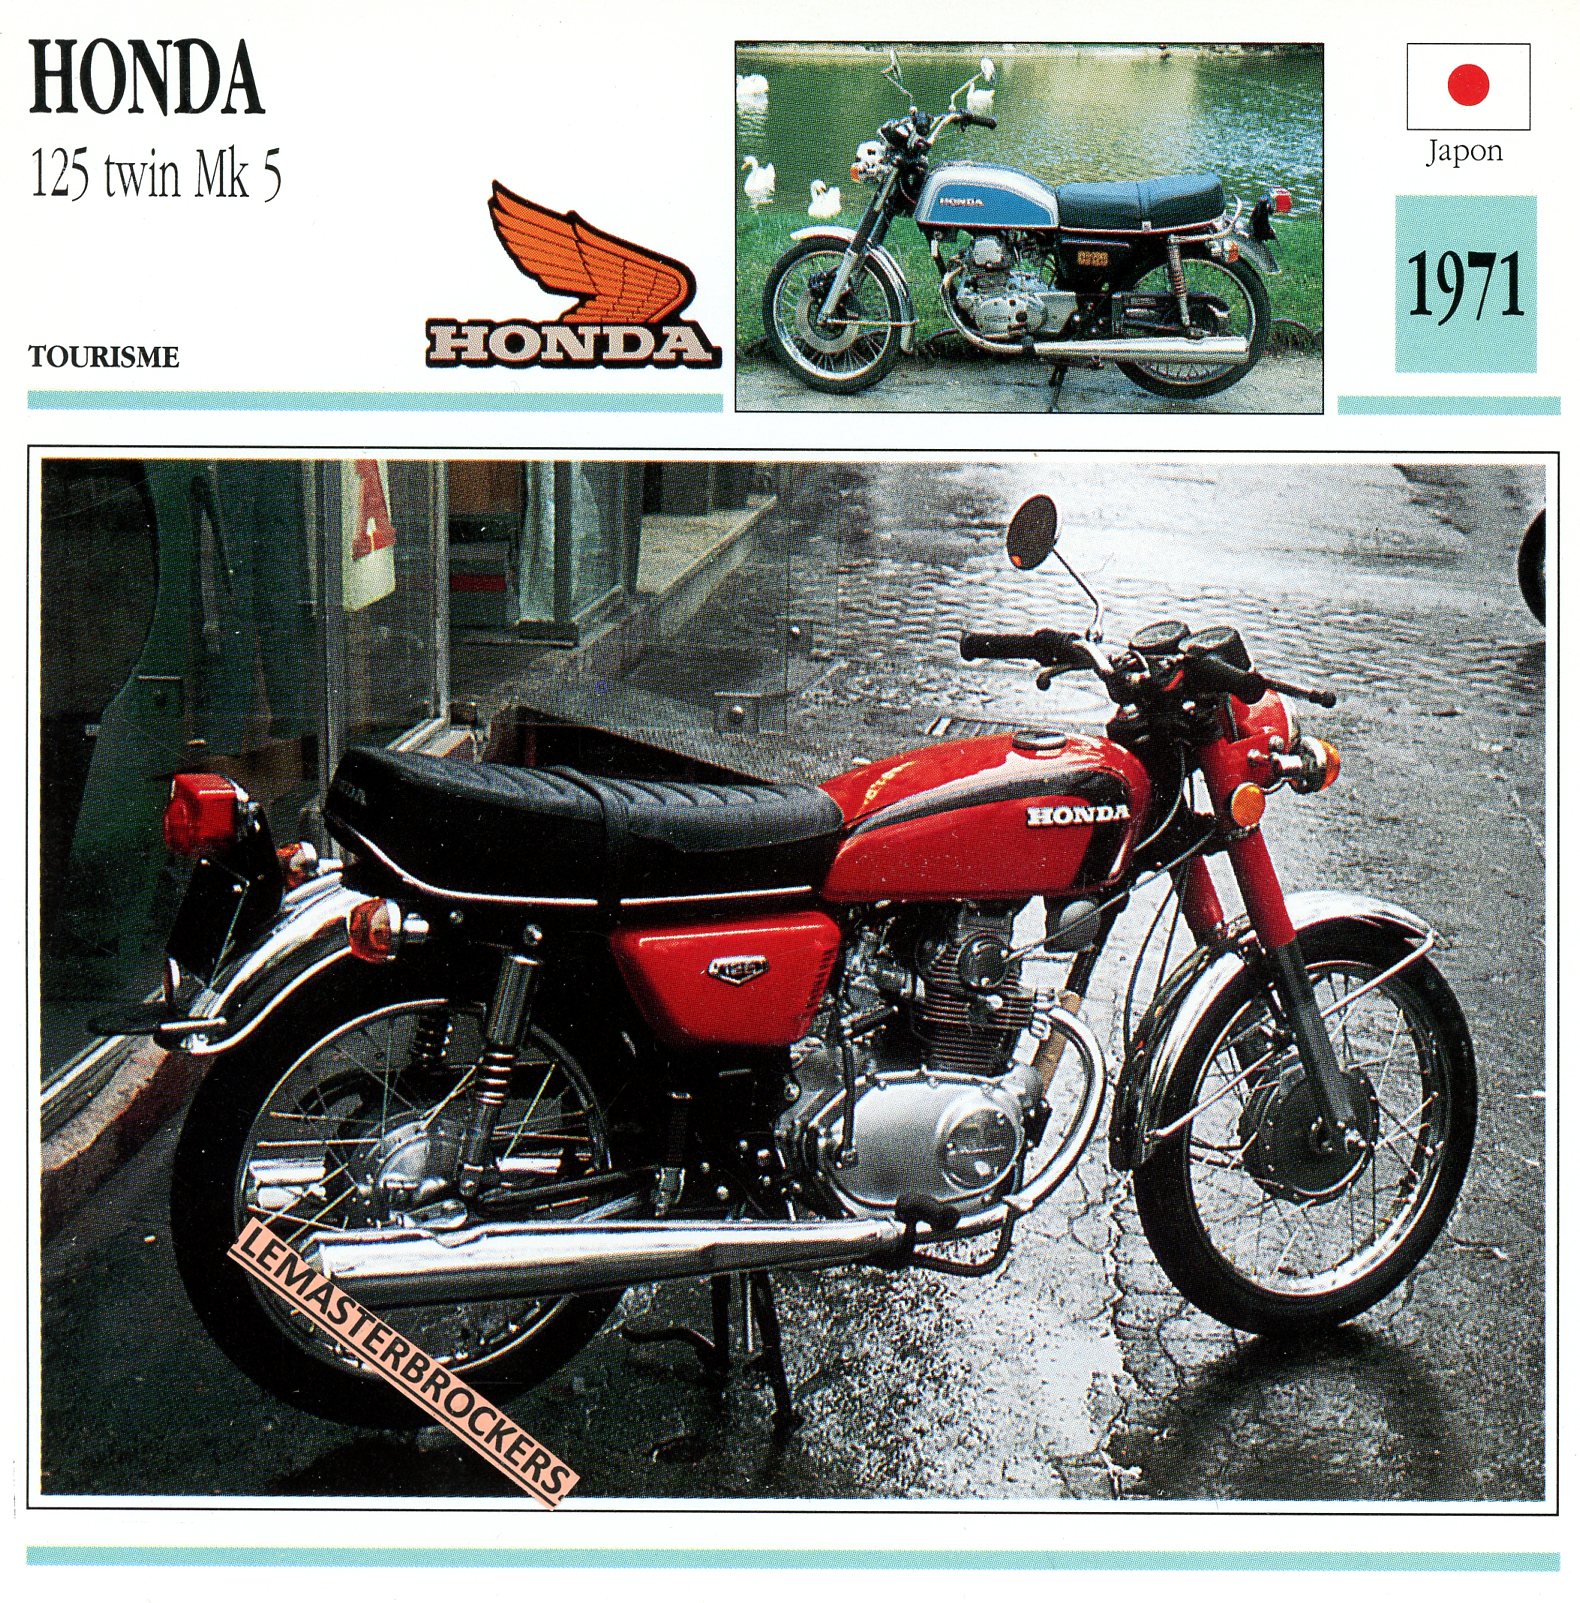 FICHE-MOTO-HONDA-125-TWIN-MK5-1971-LEMASTERBROCKERS-CARS-MOTORCYCLE